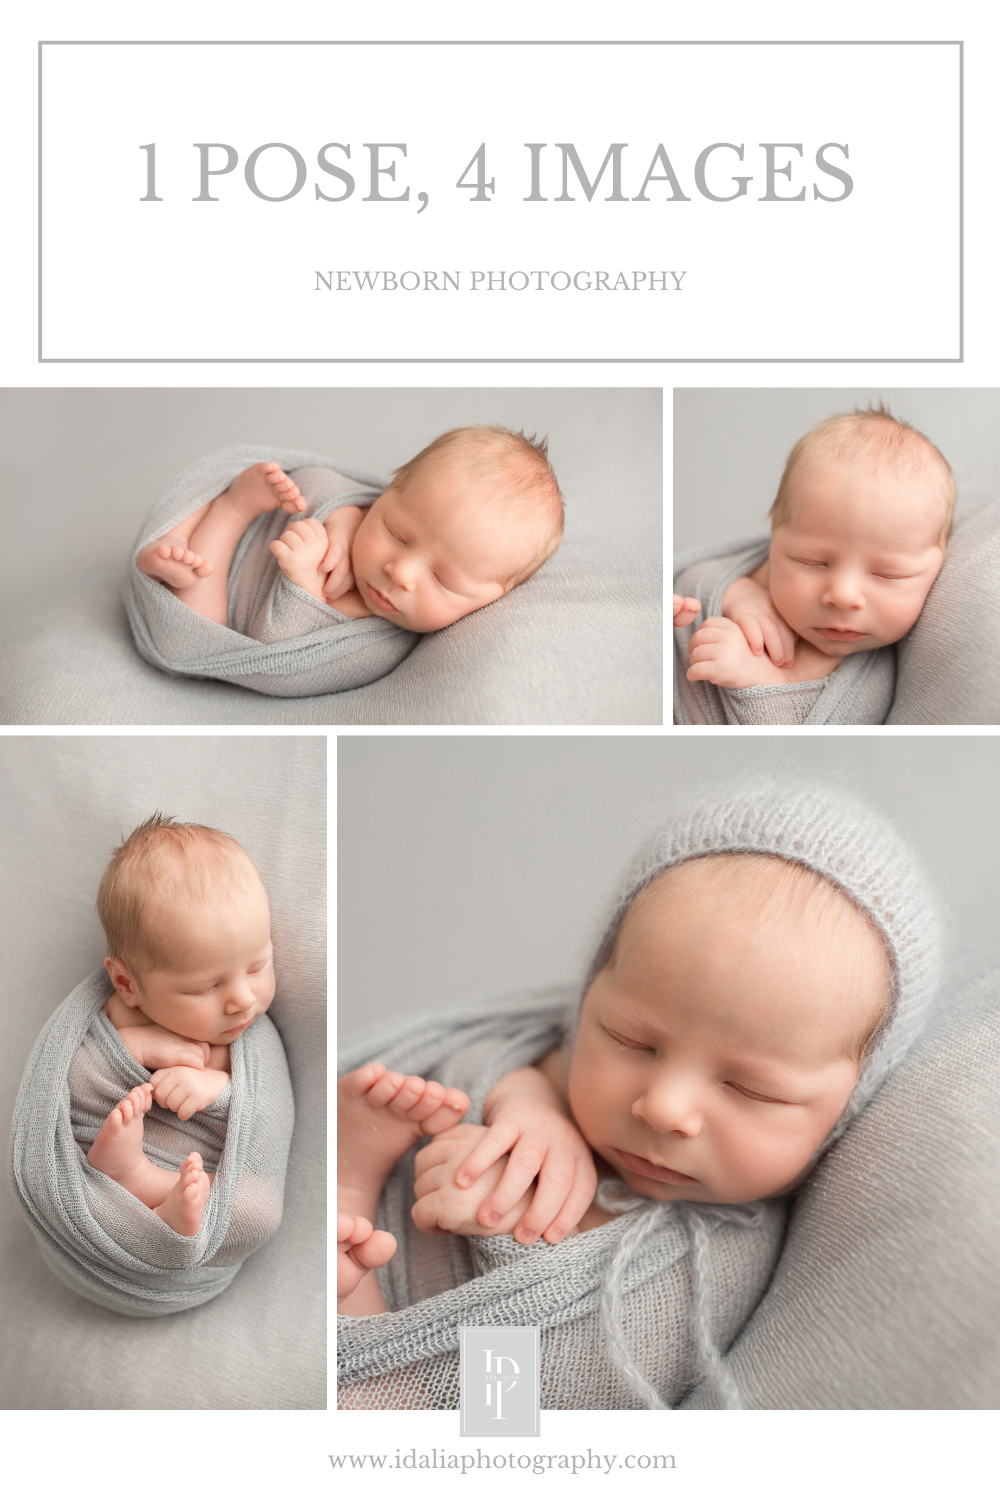 Newborn boy session in blue and gray tones by NJ Wedding Photographer Idalia Photography